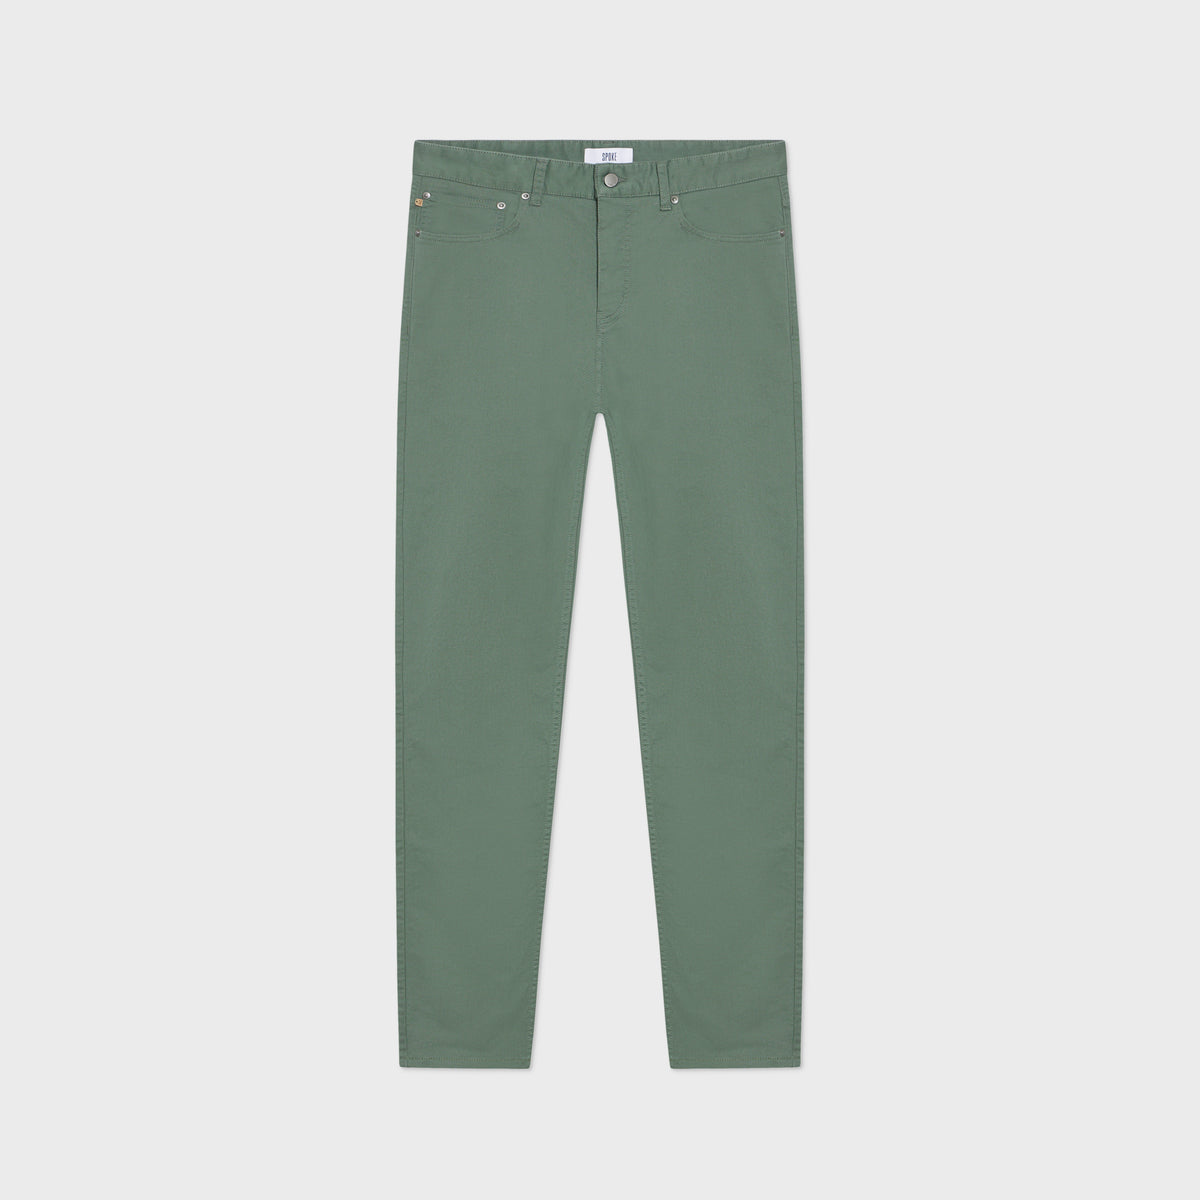 Highland Green Everyday Men's Custom Fit Chino Pants - SPOKE - SPOKE